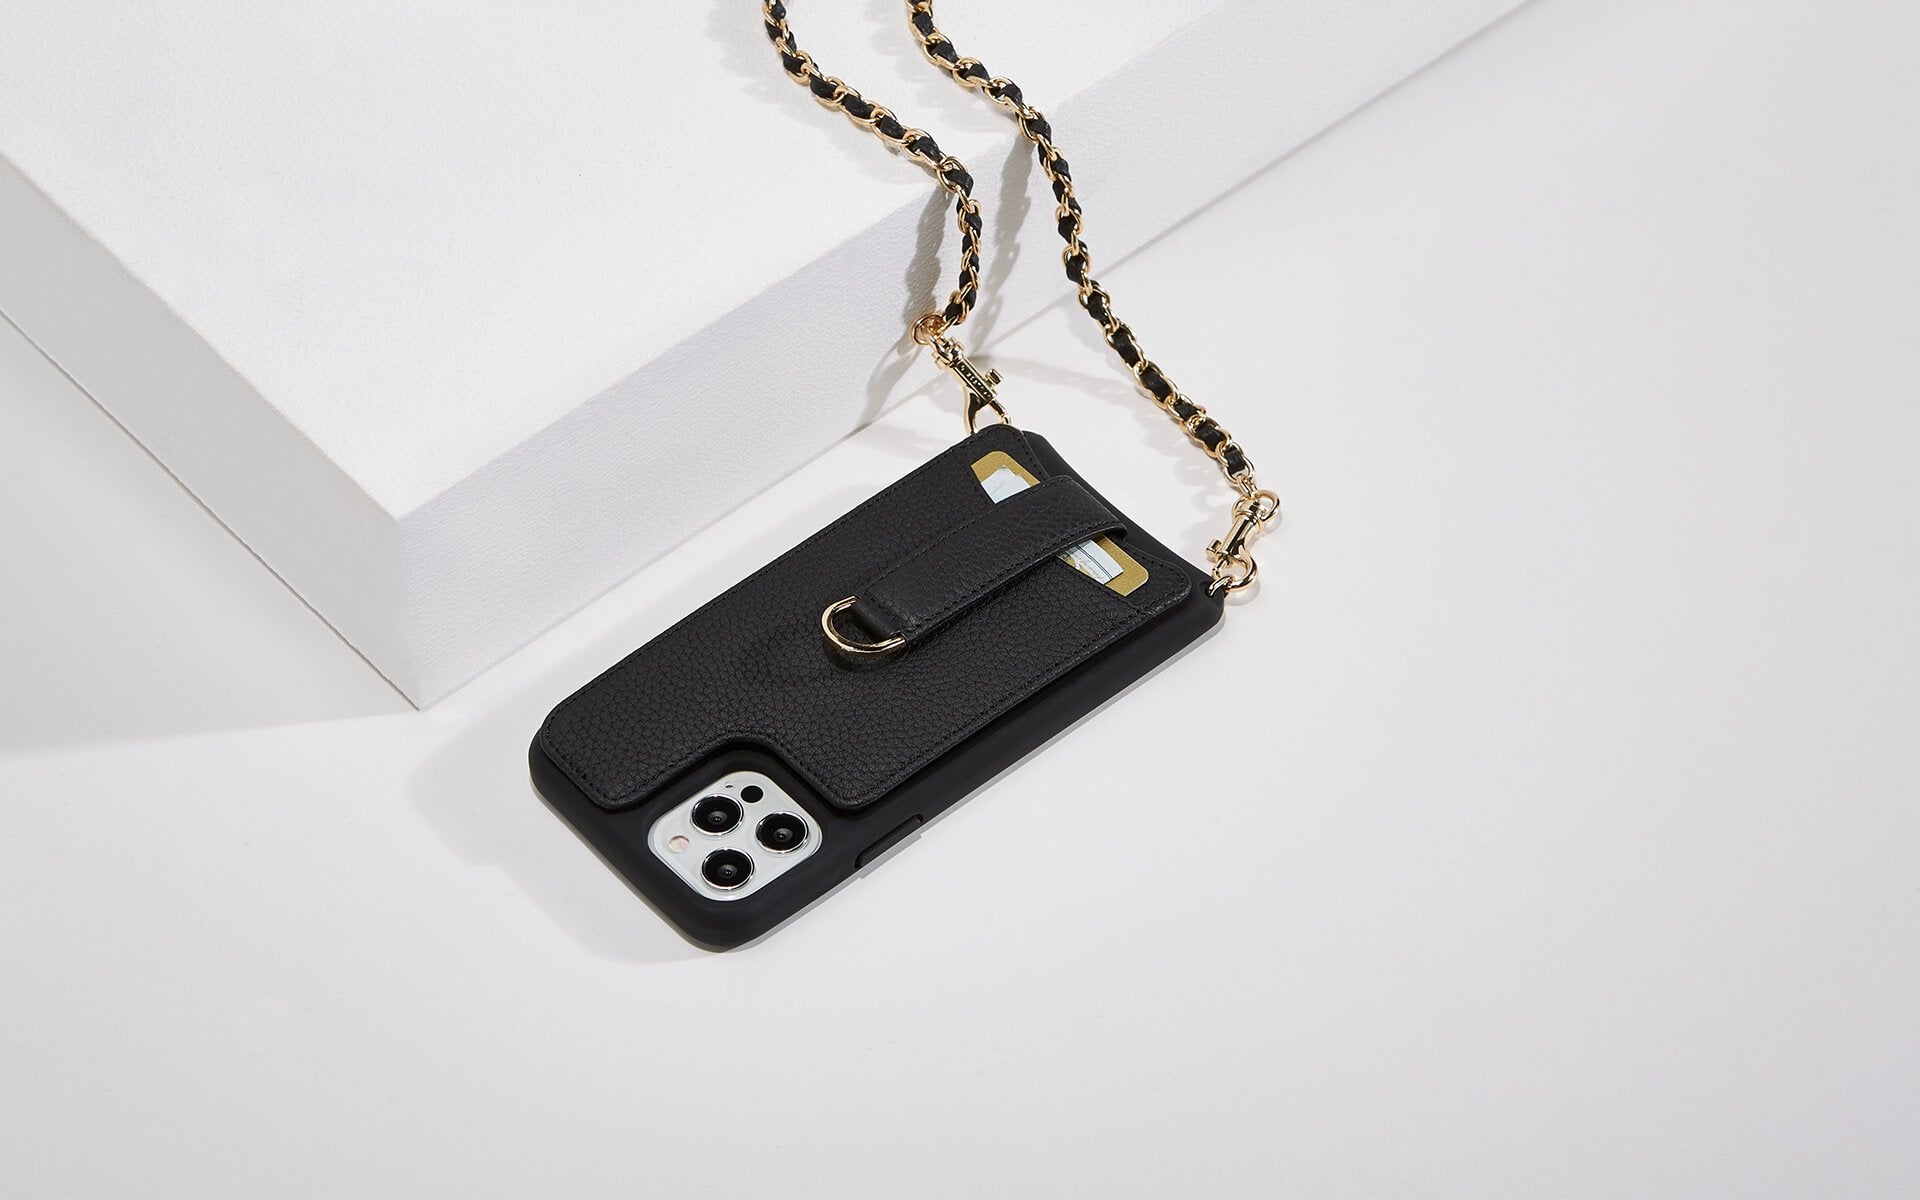 iPhone 12 Pro Max Leather Designer Phone Case-White